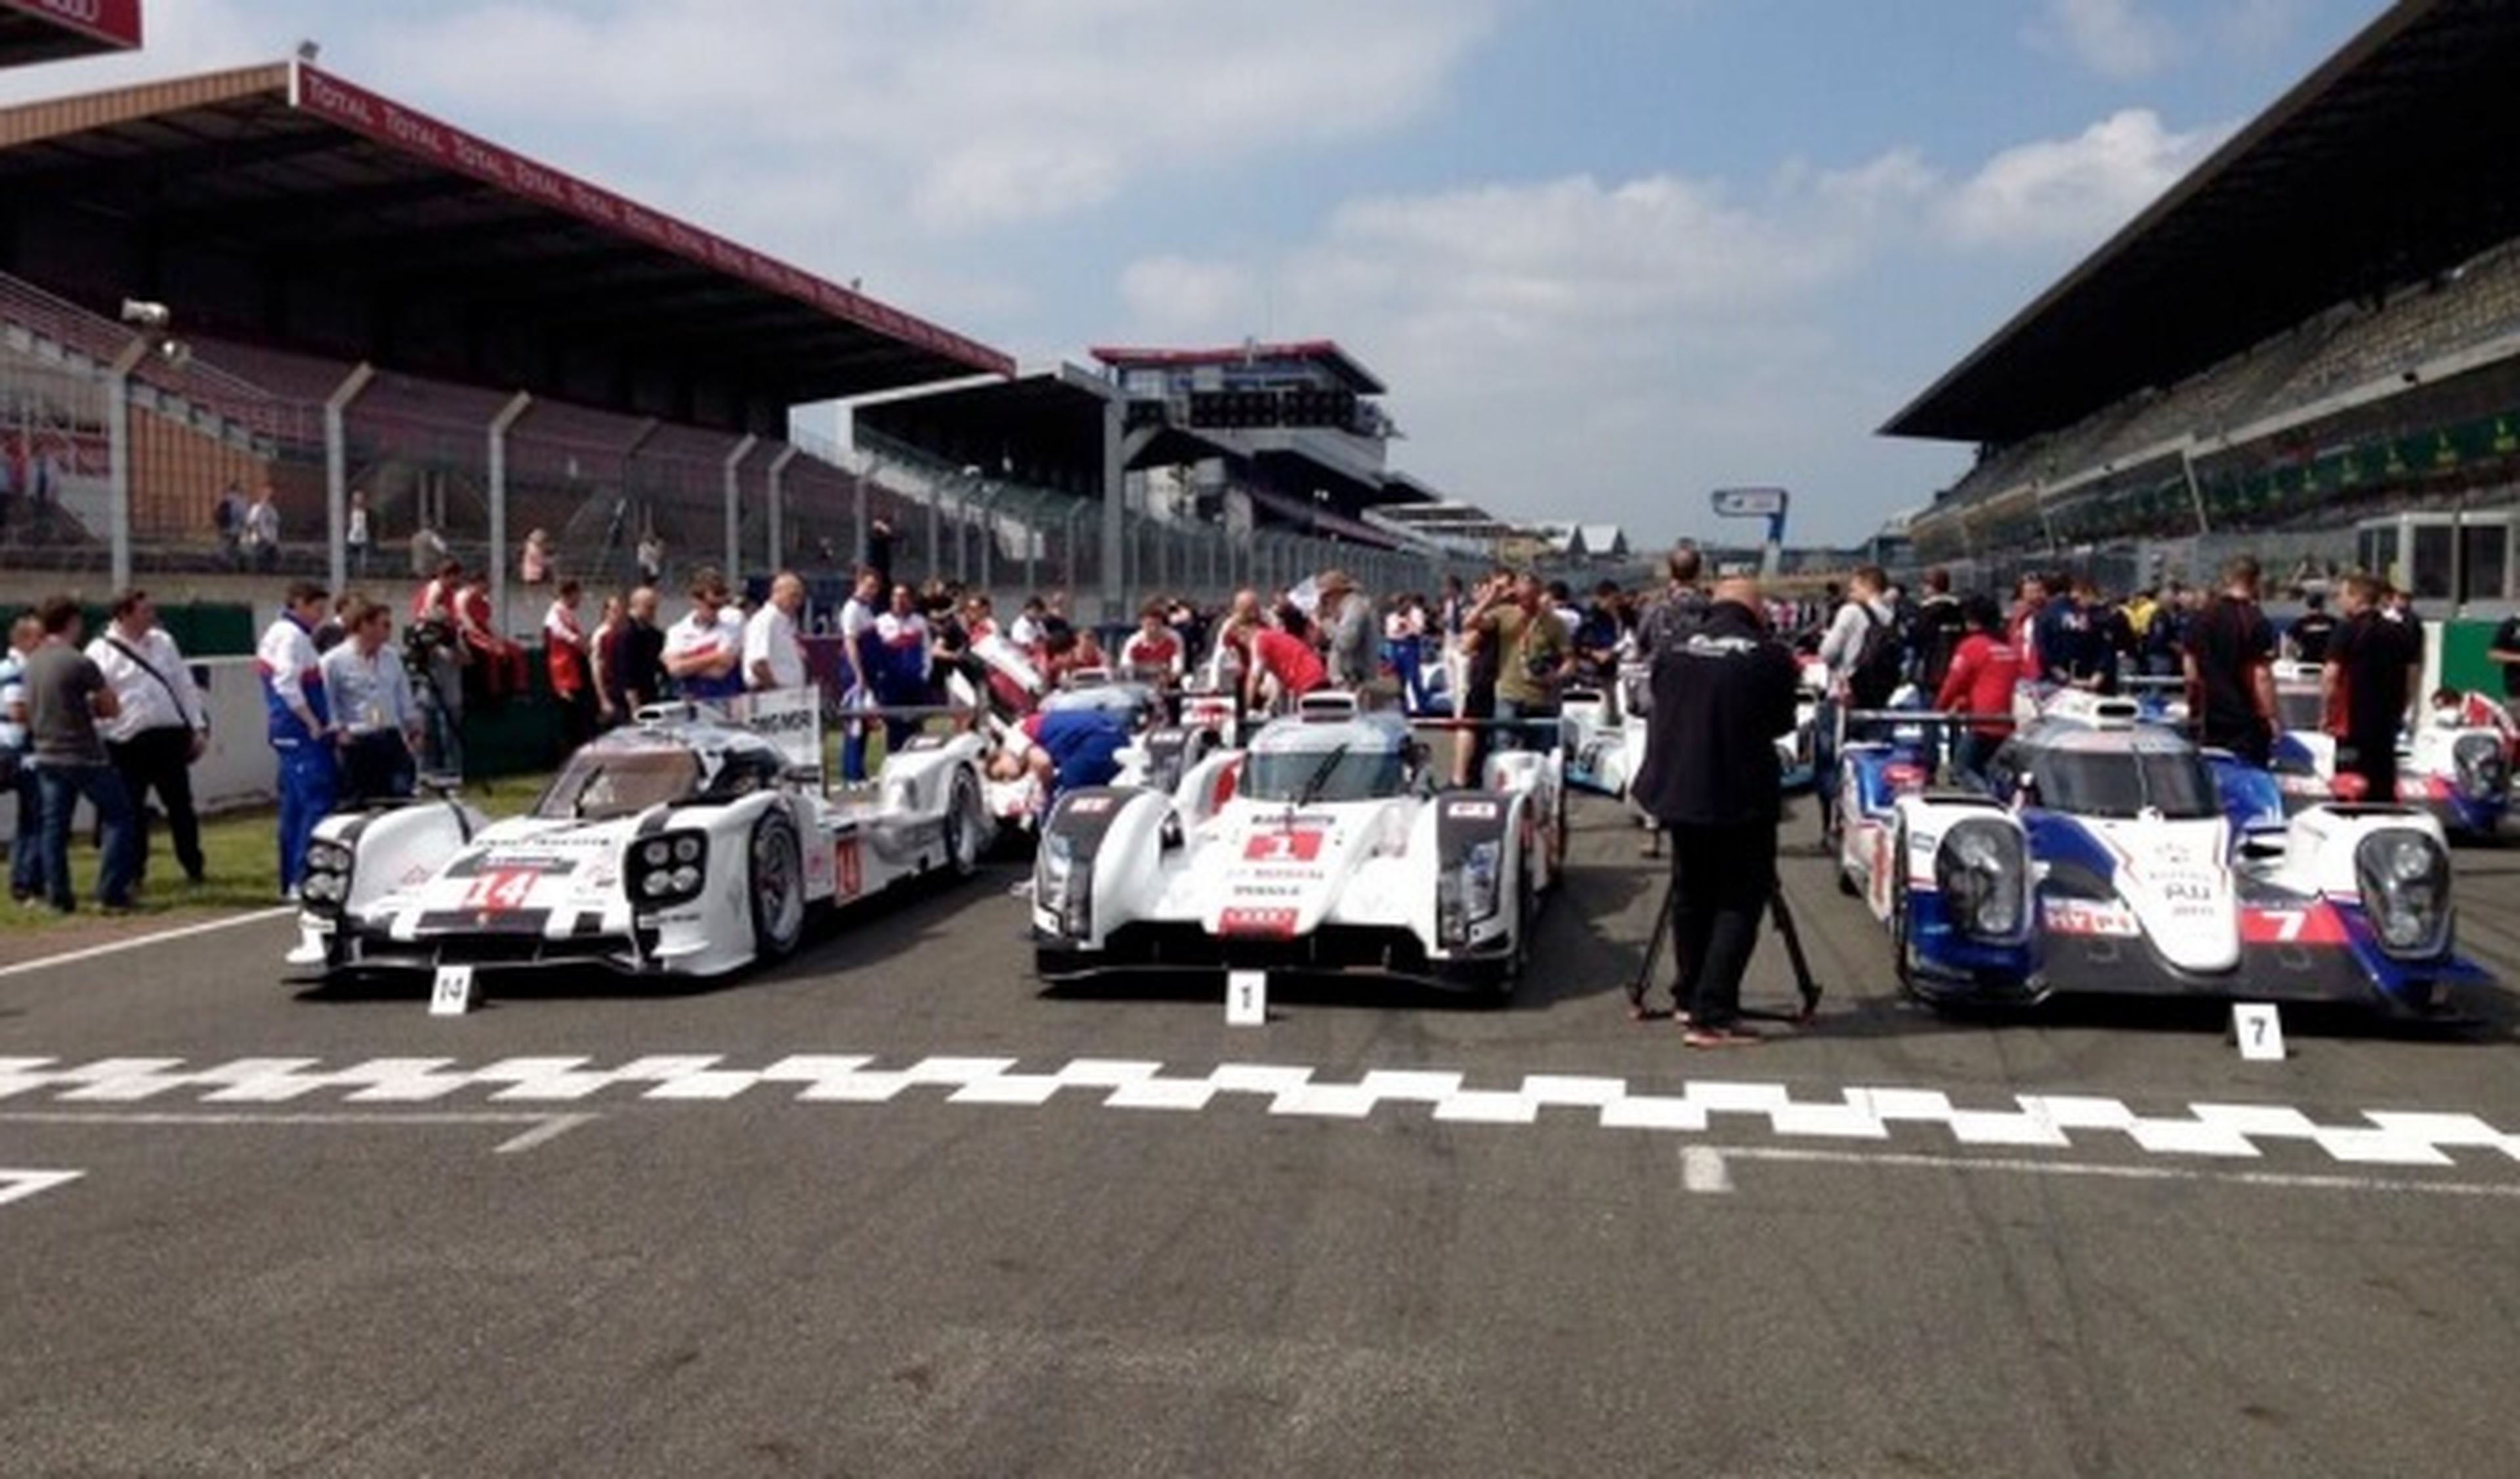 Le Mans 2014 online: las 24 horas de Le Mans en directo